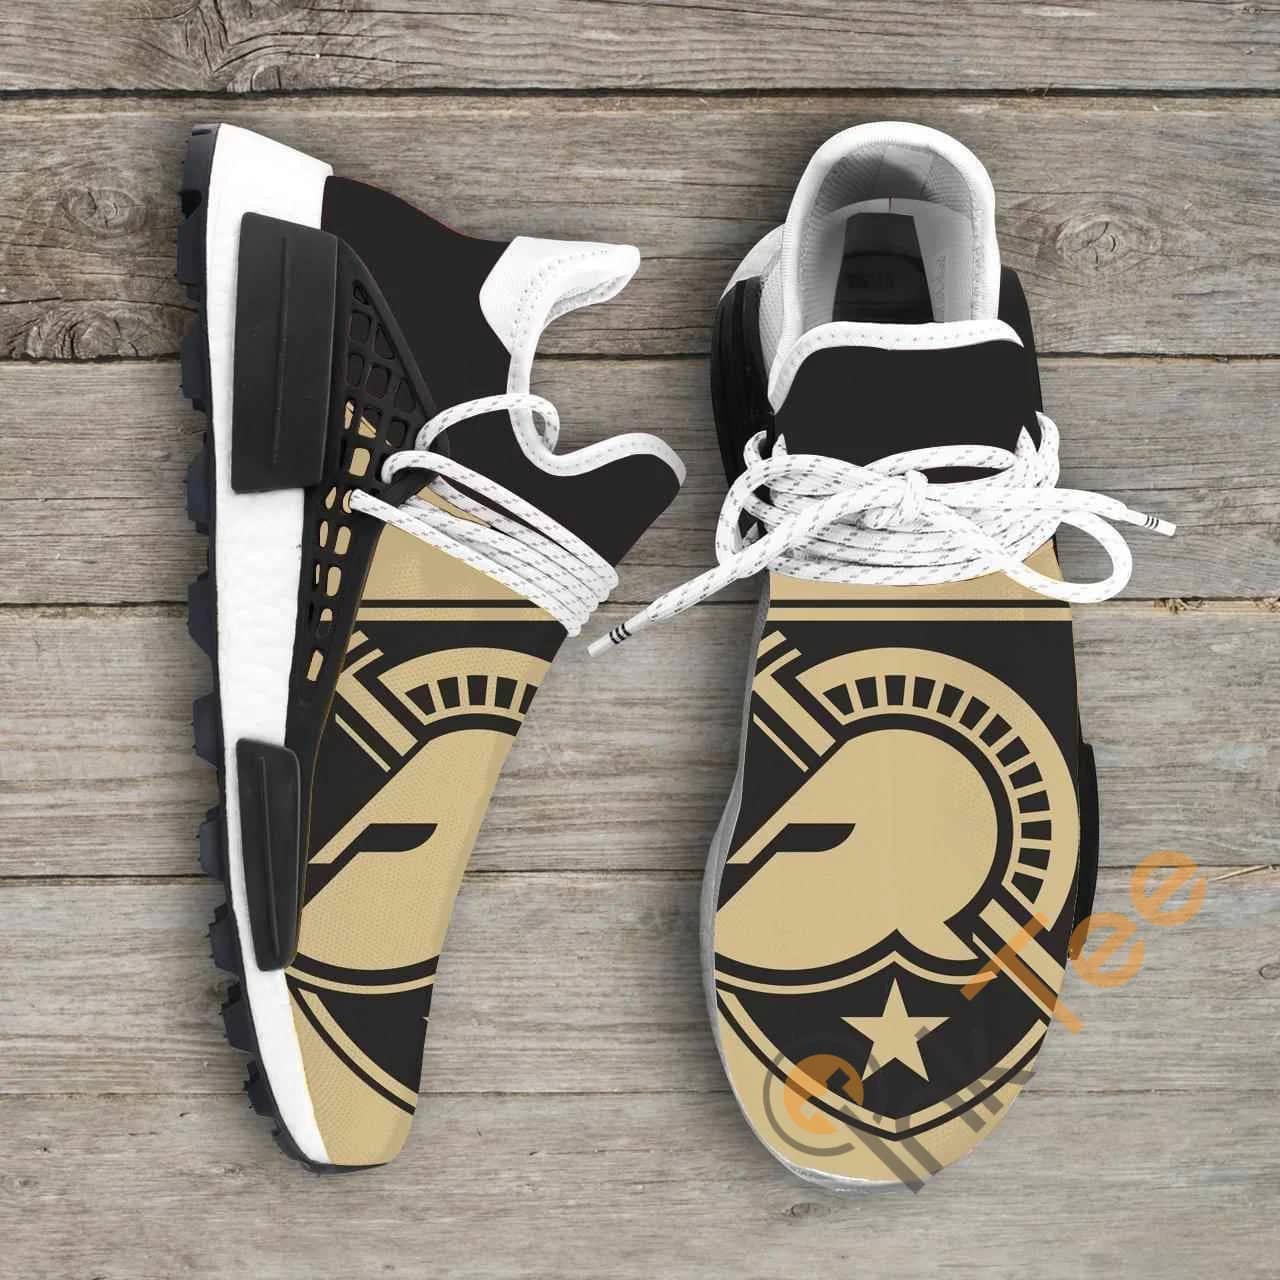 Army Black Knights Ncaa NMD Human Shoes